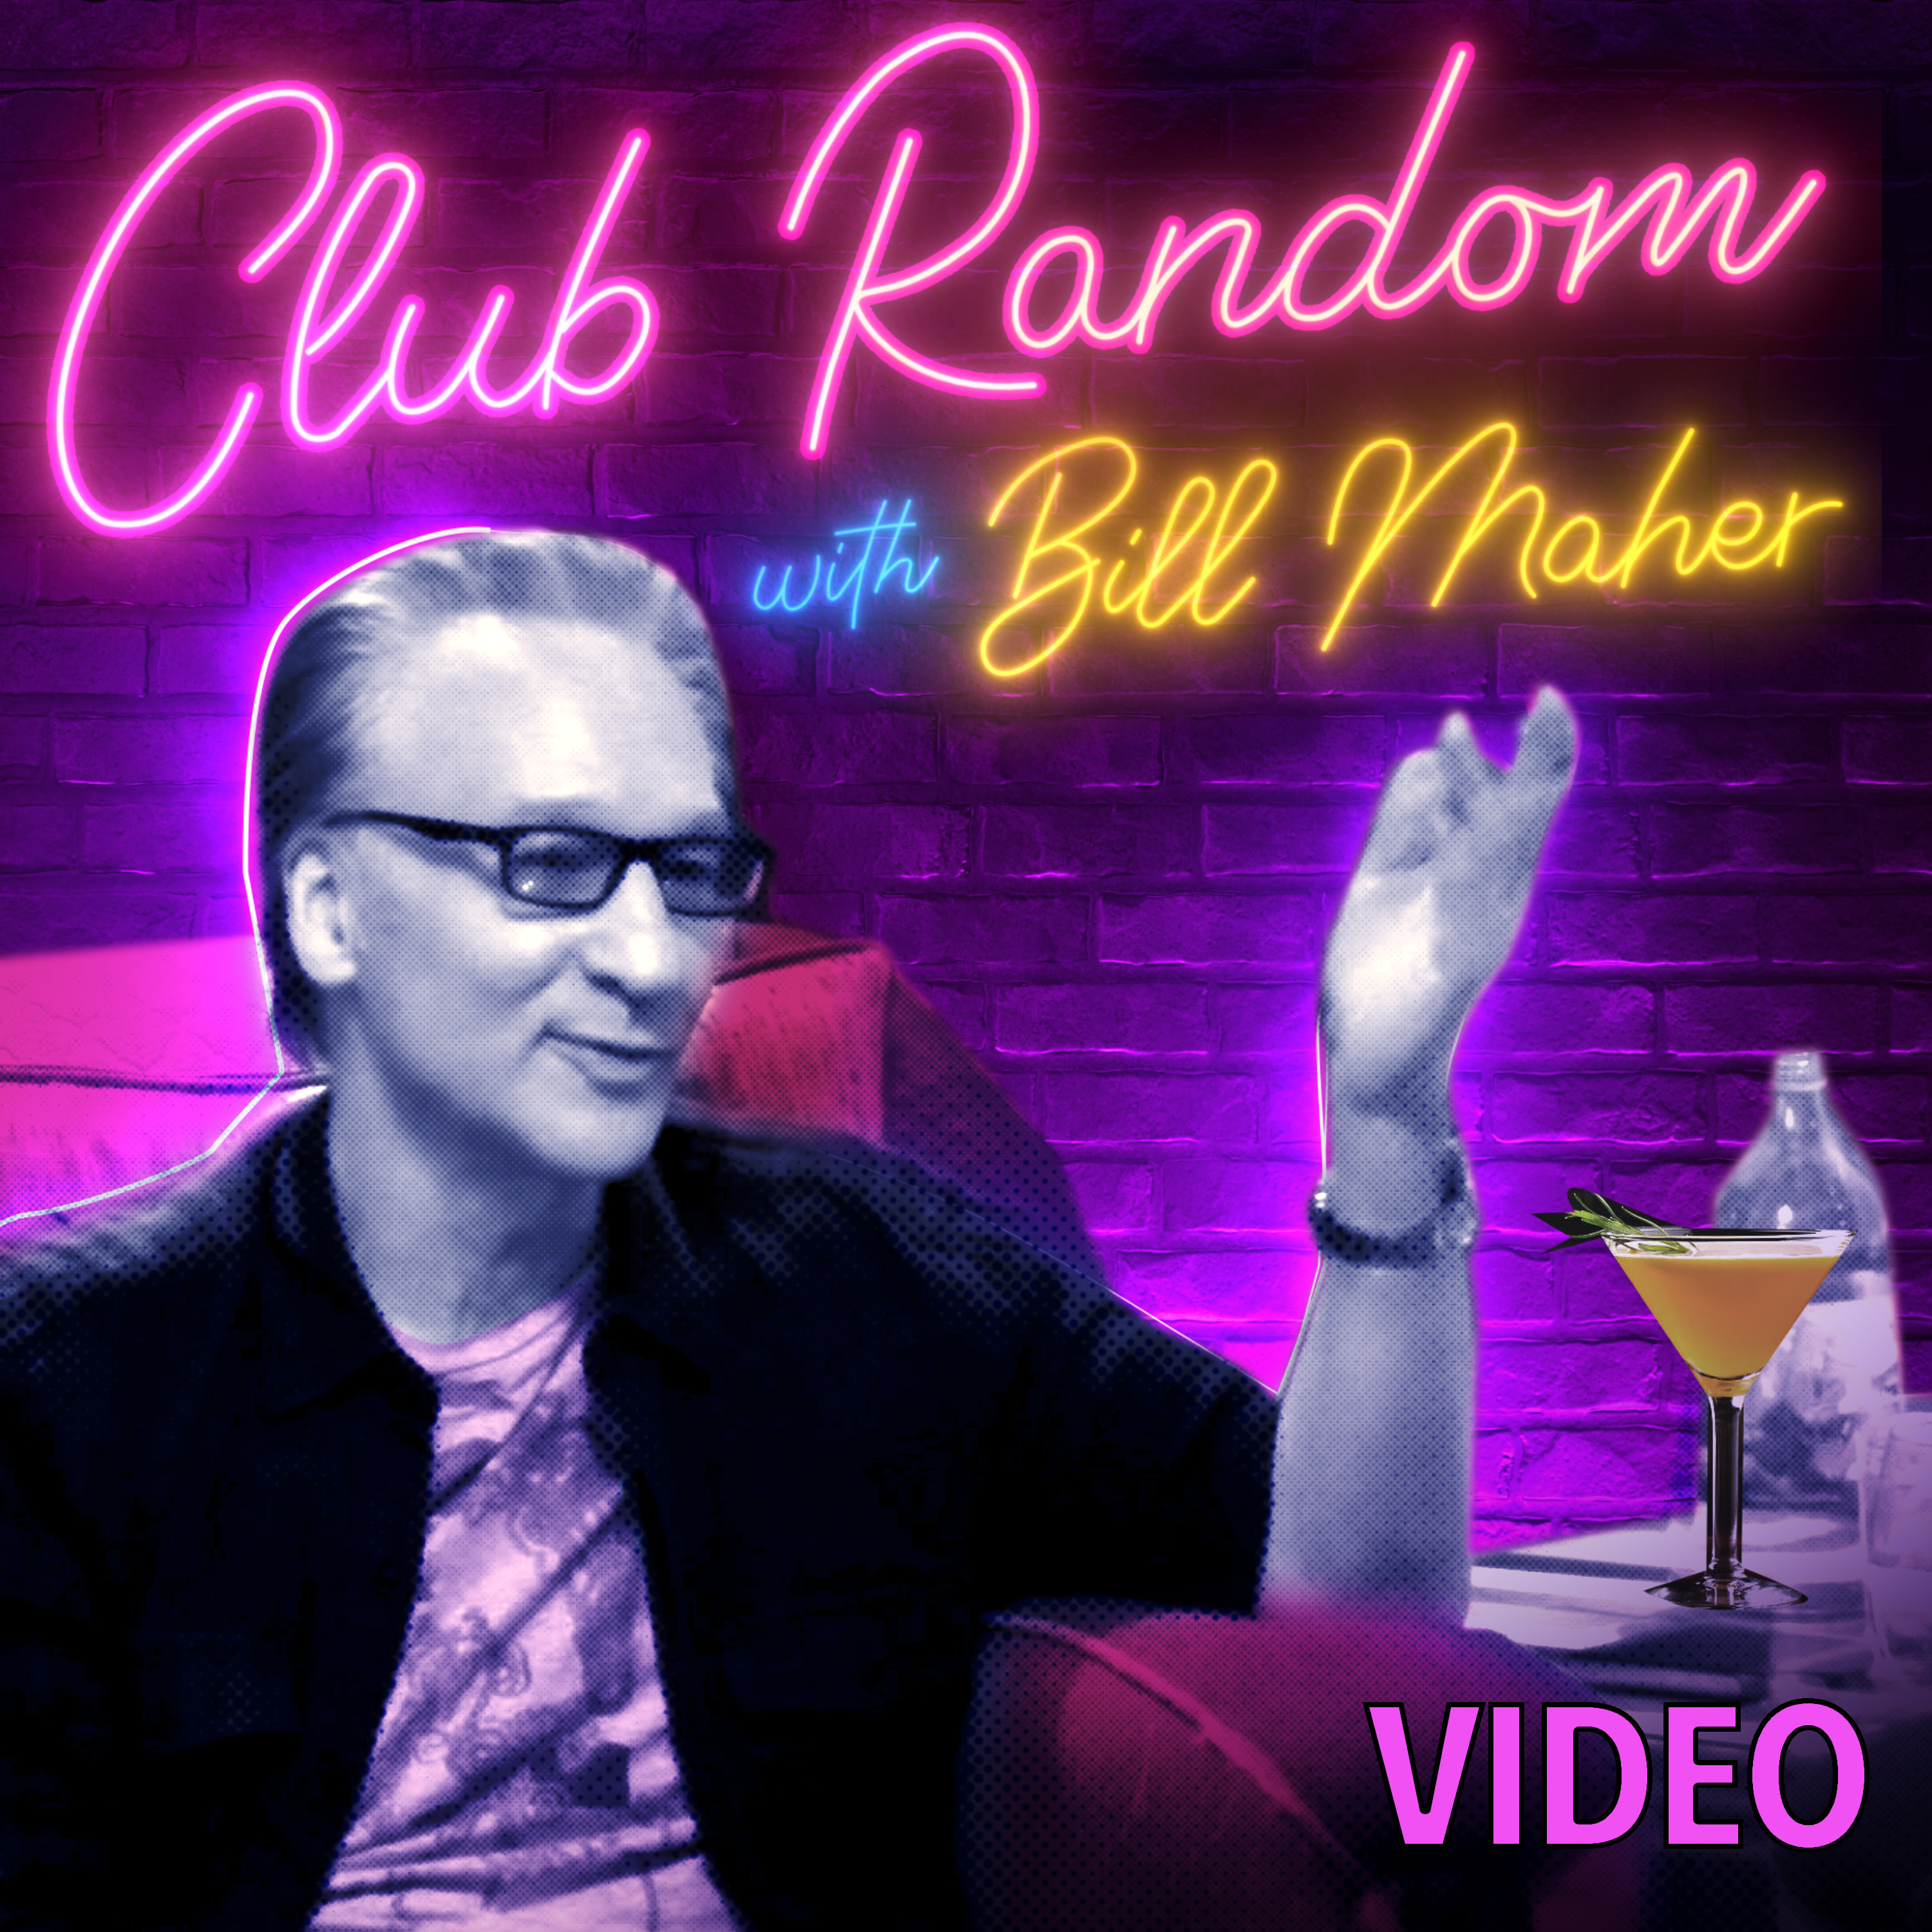 Video: Guys We F****d | Club Random with Bill Maher